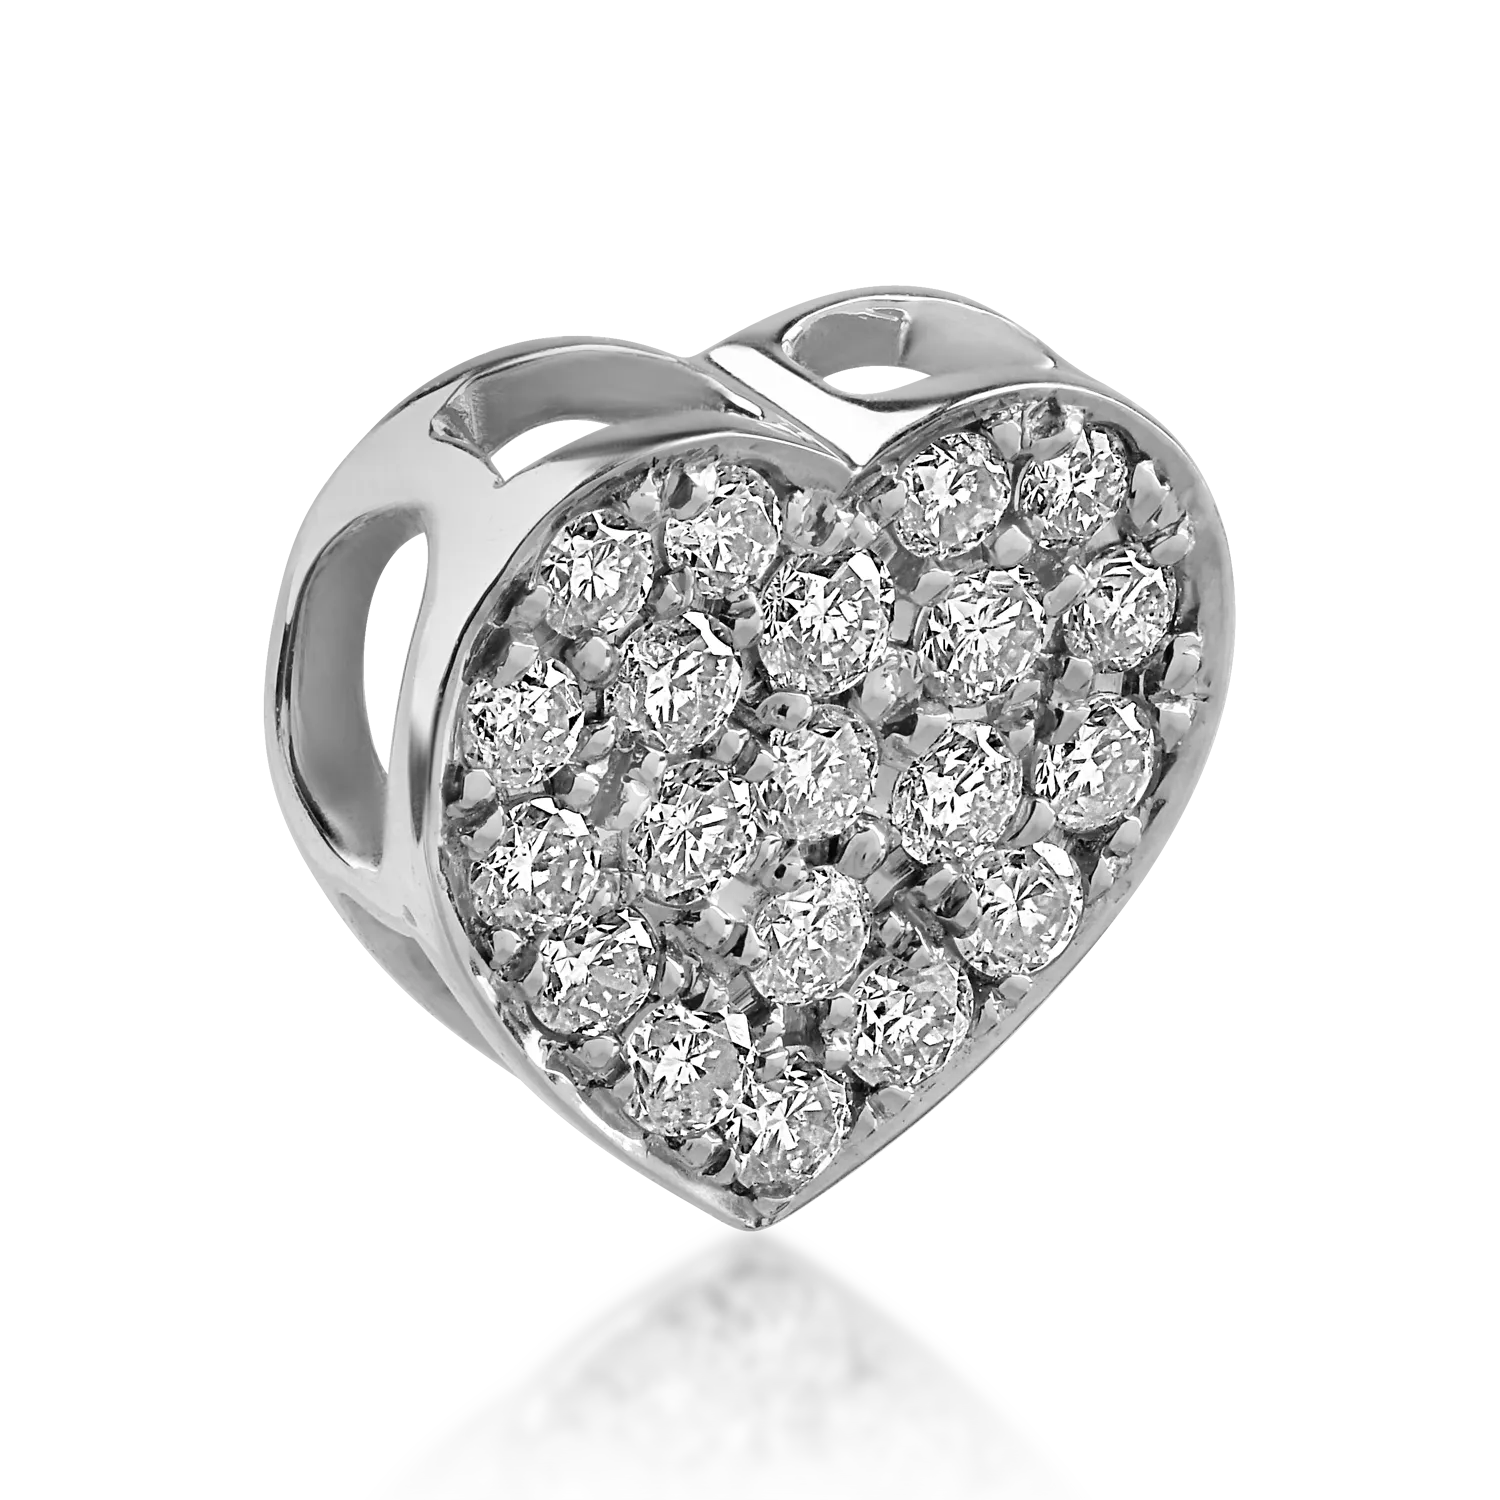 White gold heart pendant with 0.22ct diamonds